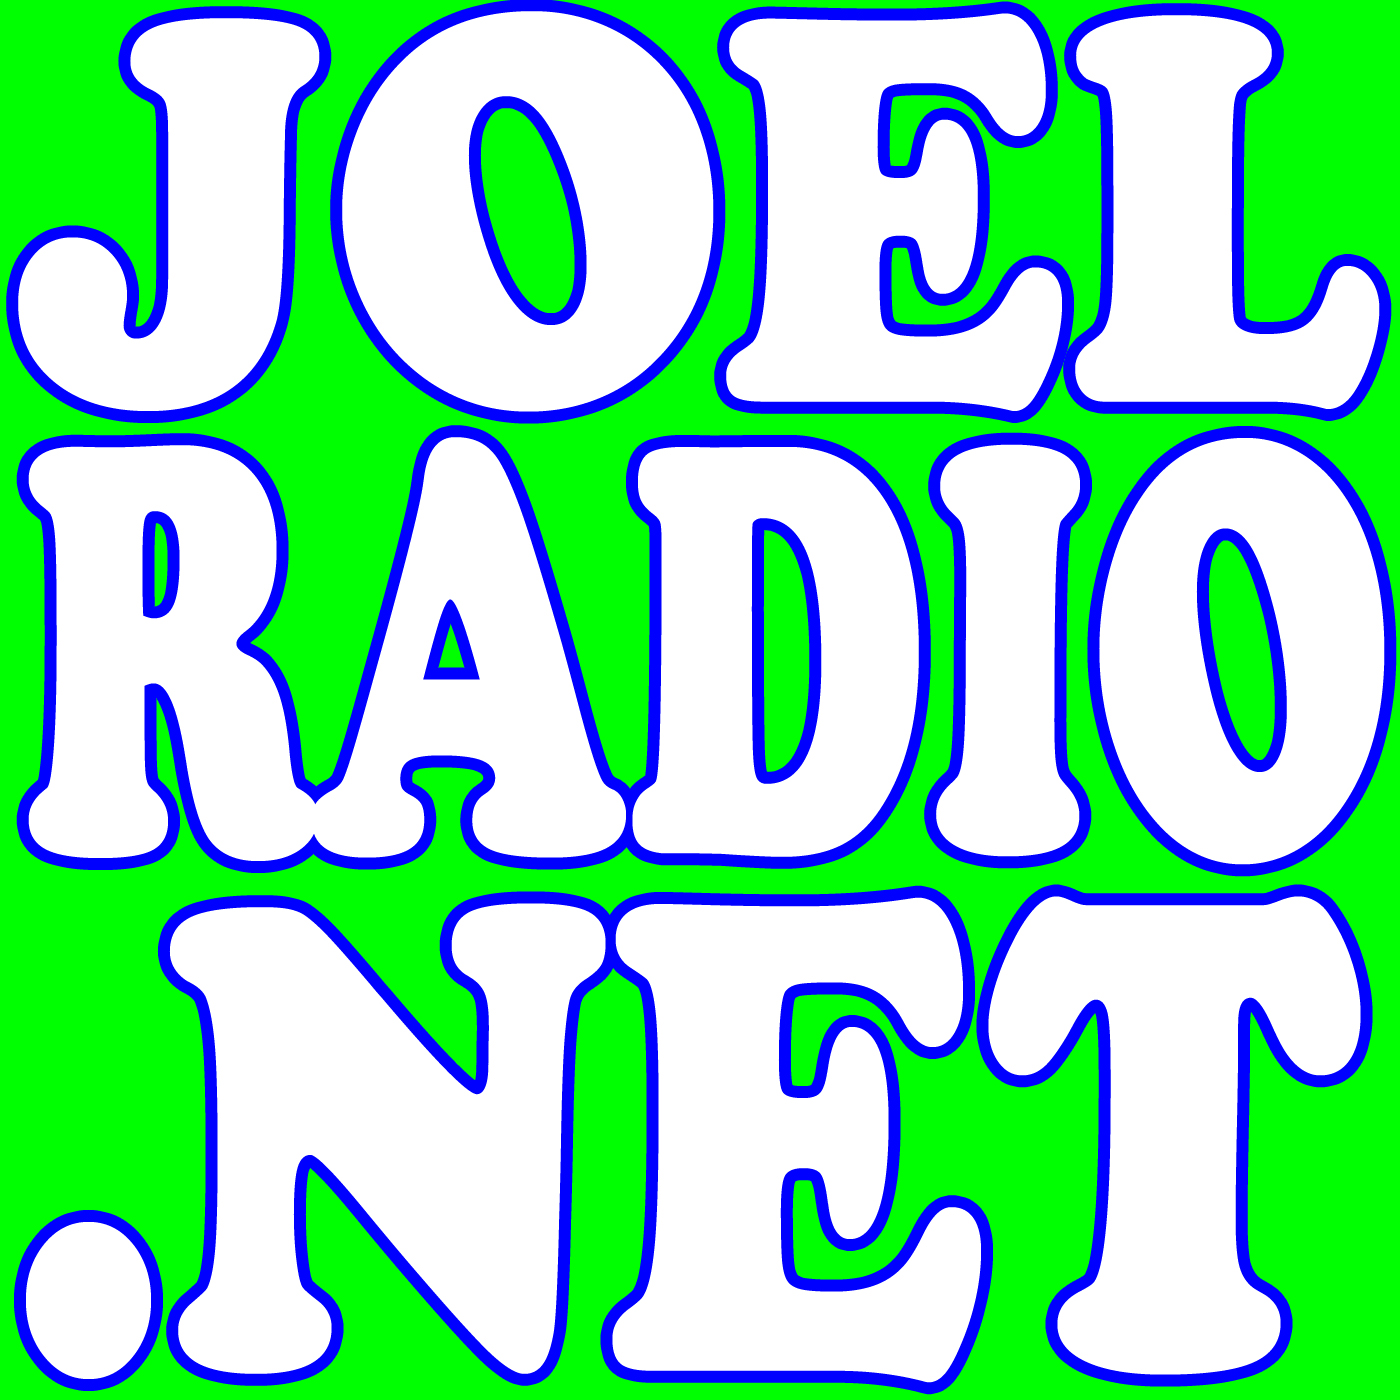 JoelRadio.net